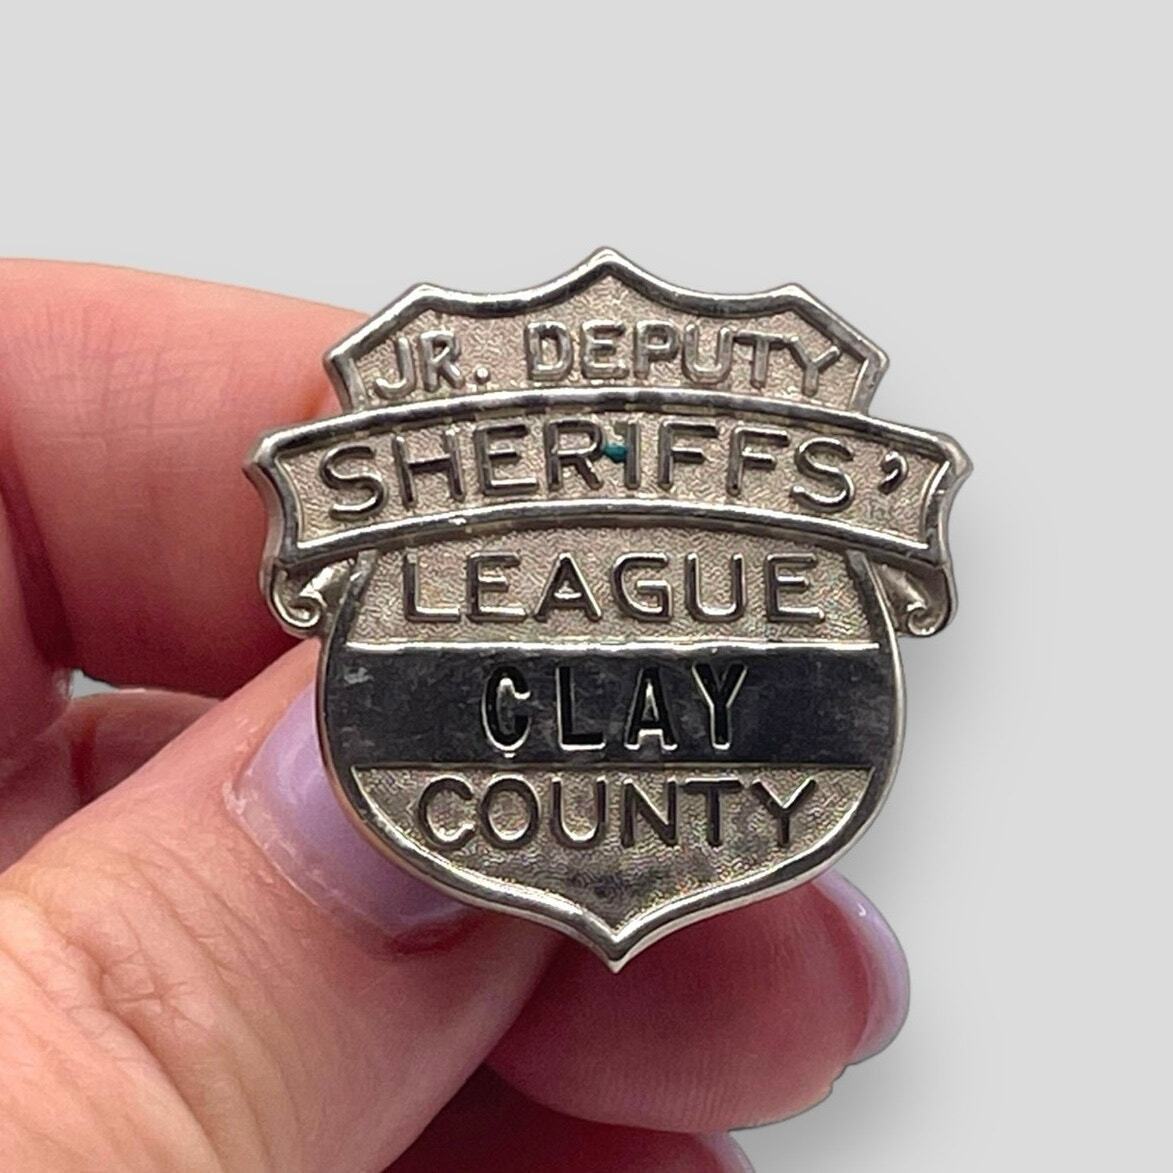 1960s Vintage JR. Deputy Sheriffs' League CLAY County Metal Badge Pin